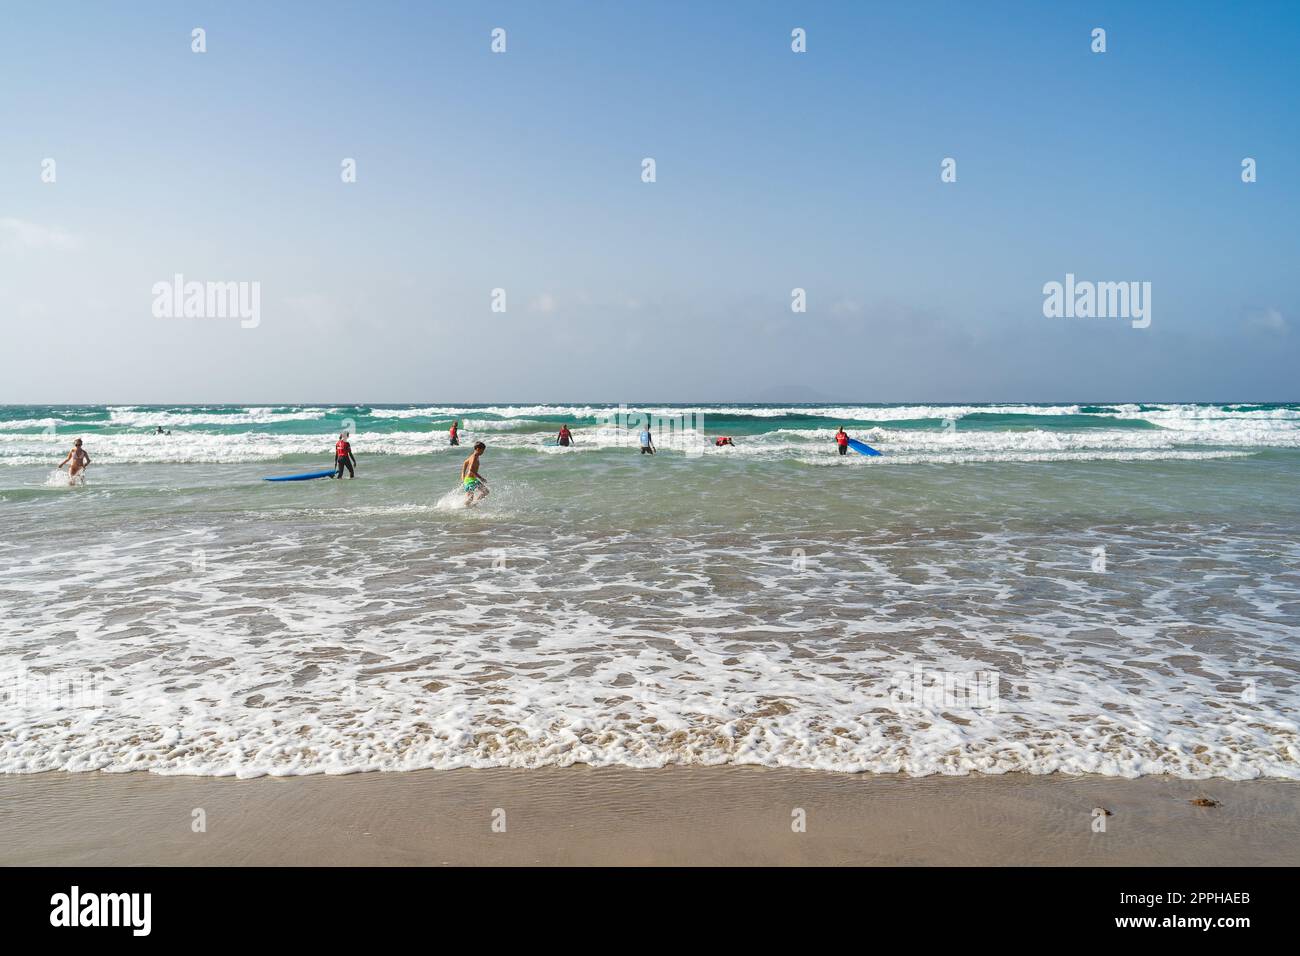 FAMARA BEACH LANZAROTE, CANARY ISLANDS - JULY 21, 2022: Surfers on the waves. Famara Beach (Playa de Famara), popular surfing beach in Lanzarote. Stock Photo